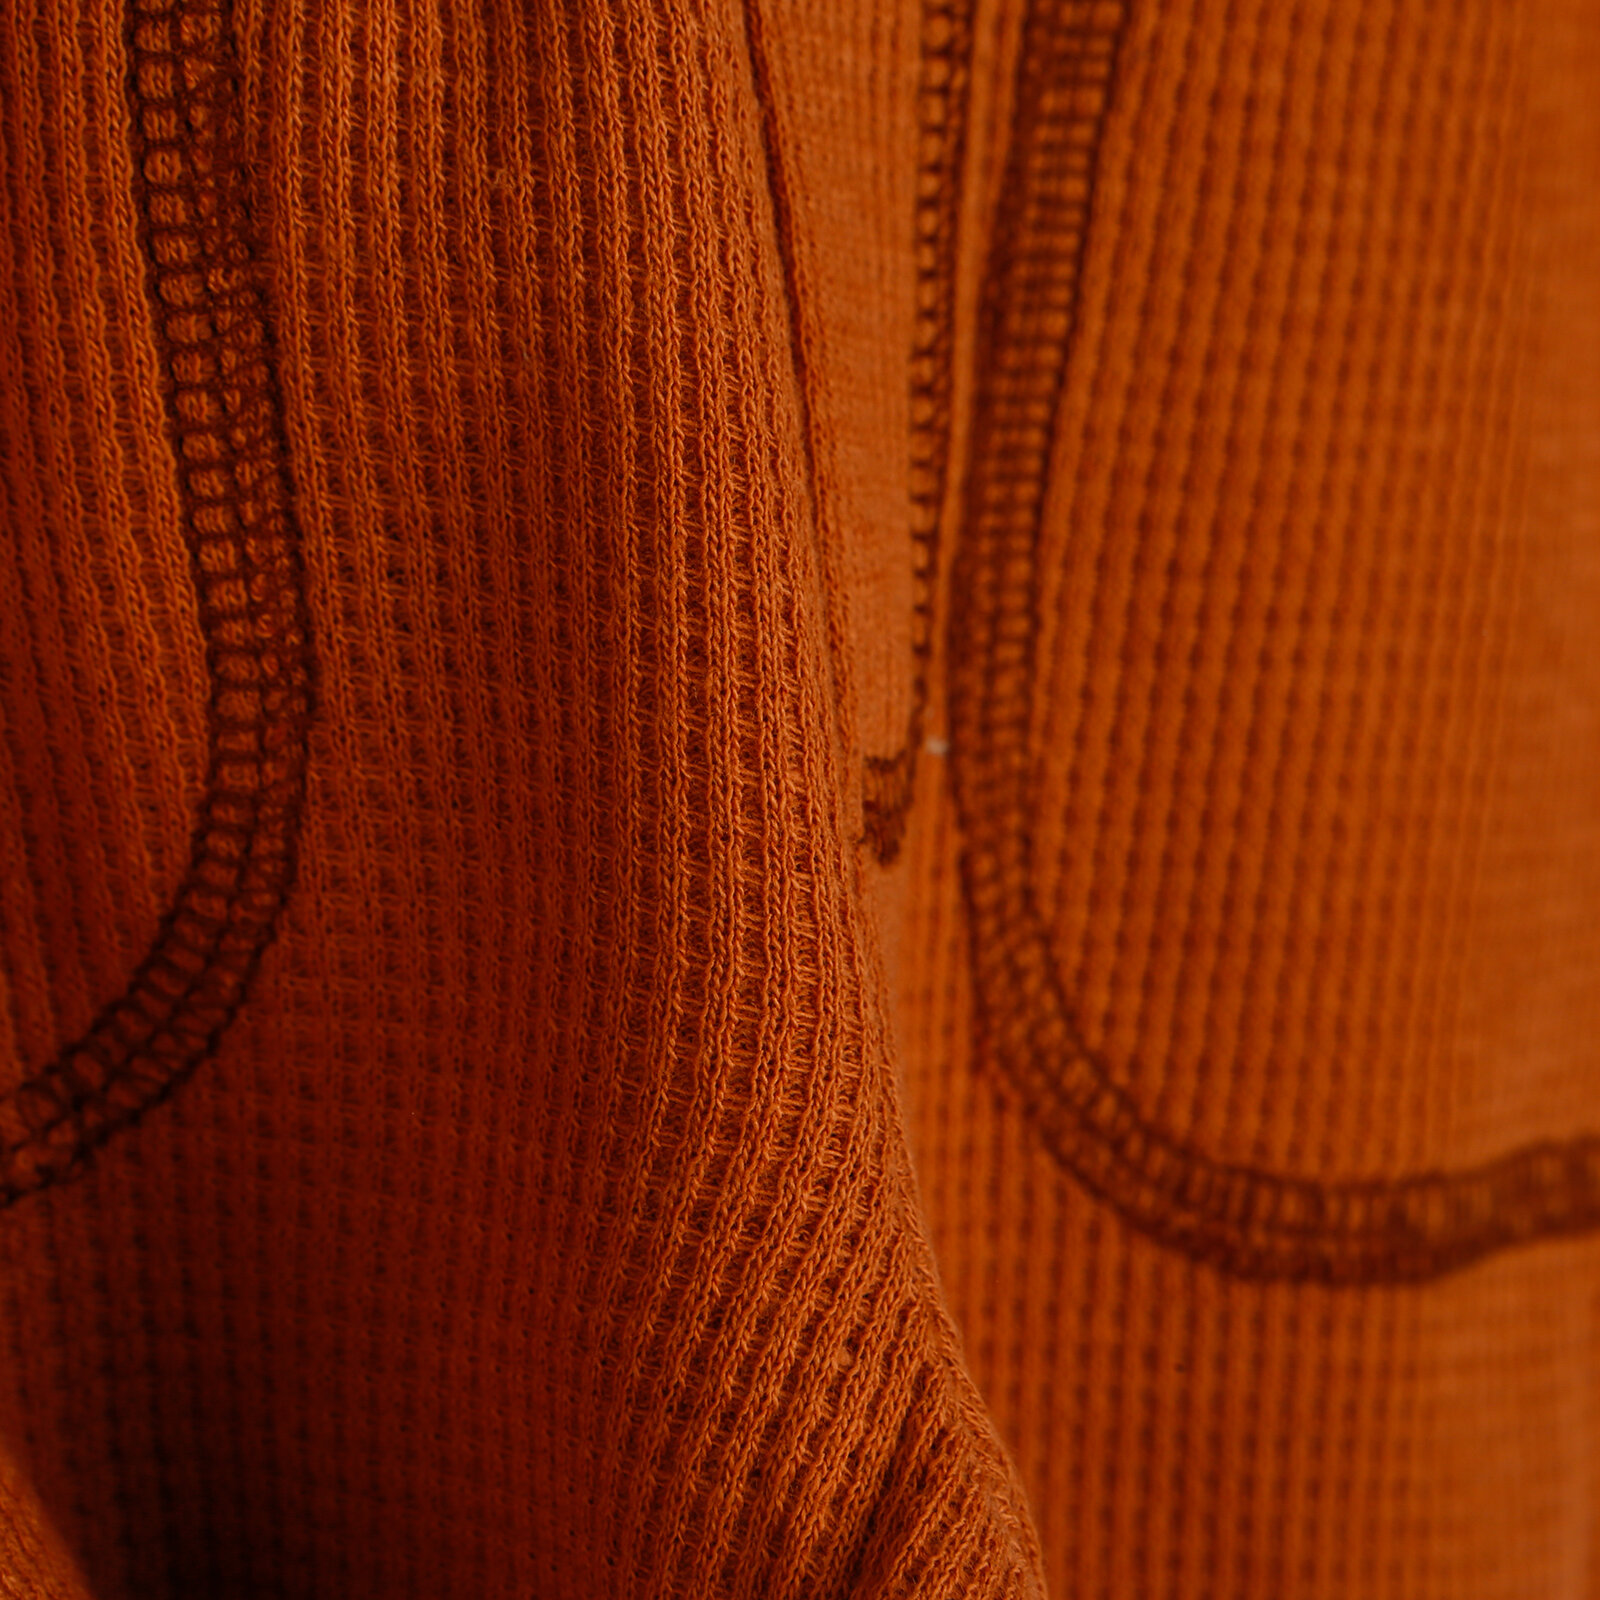 Happy Camper Erkek Bebek Sweatshirt- Dokuma Pantolon